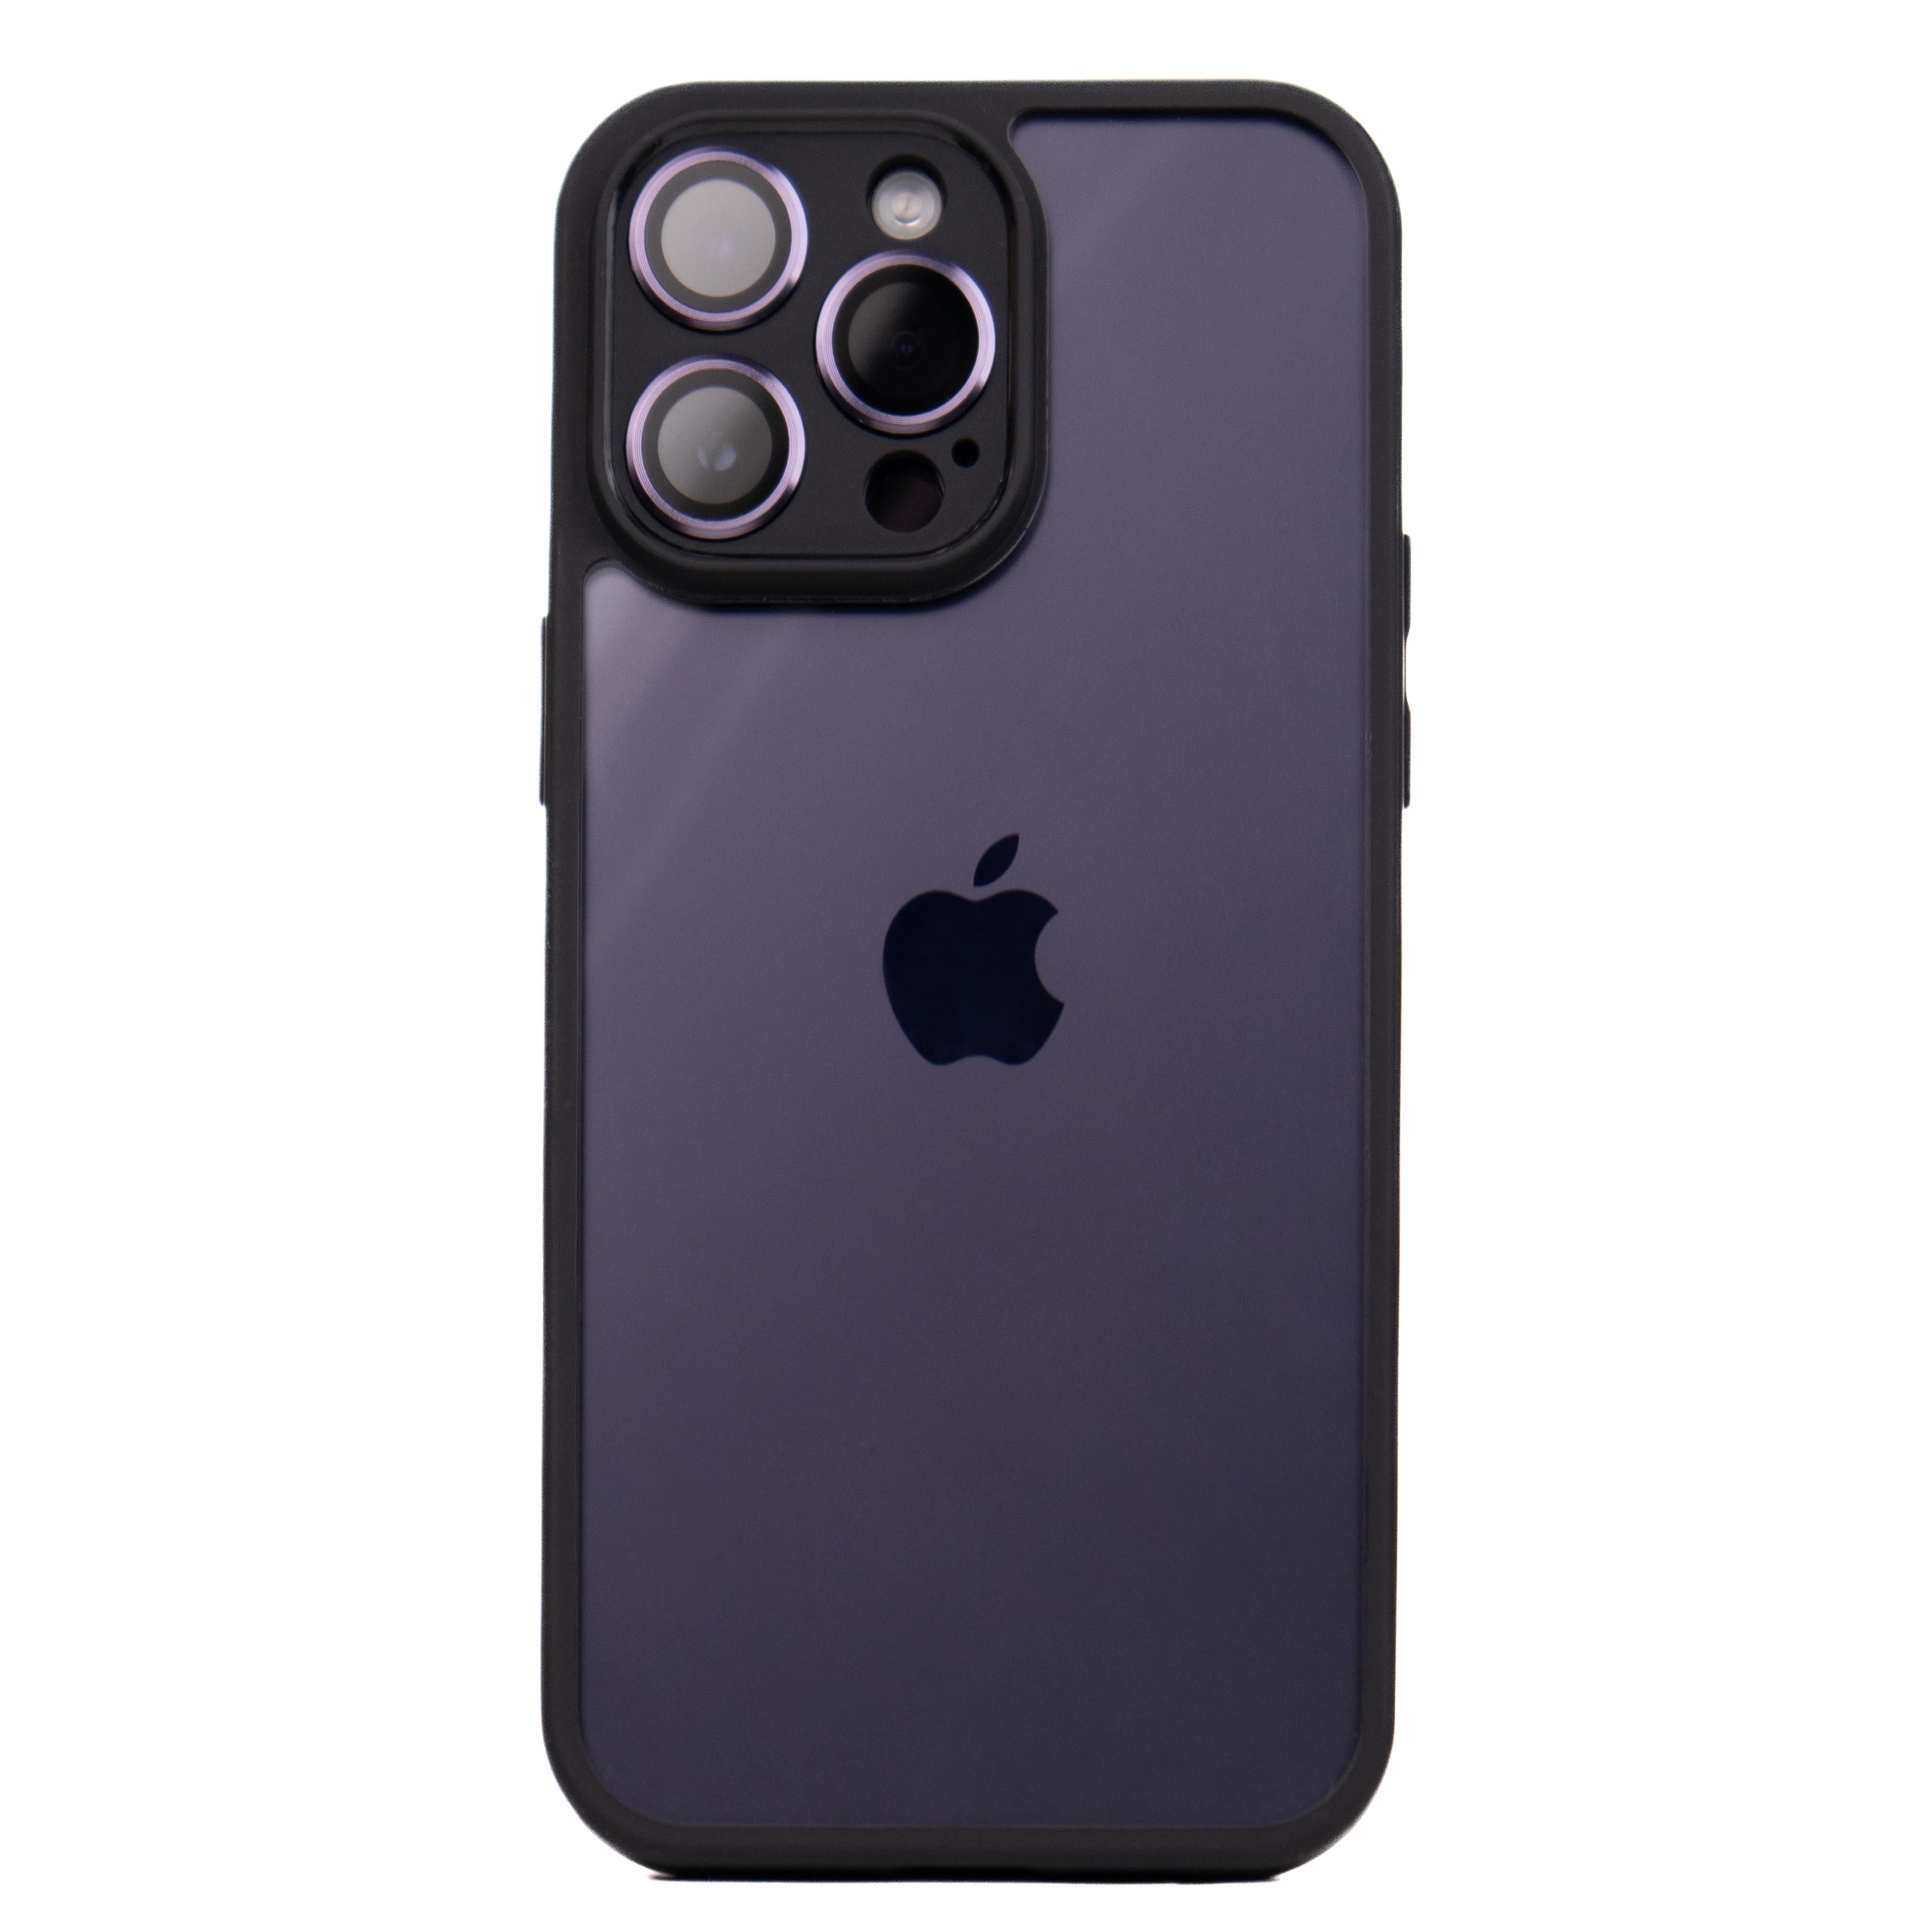 TPU Camera Protection Case iPhone 11 Pro